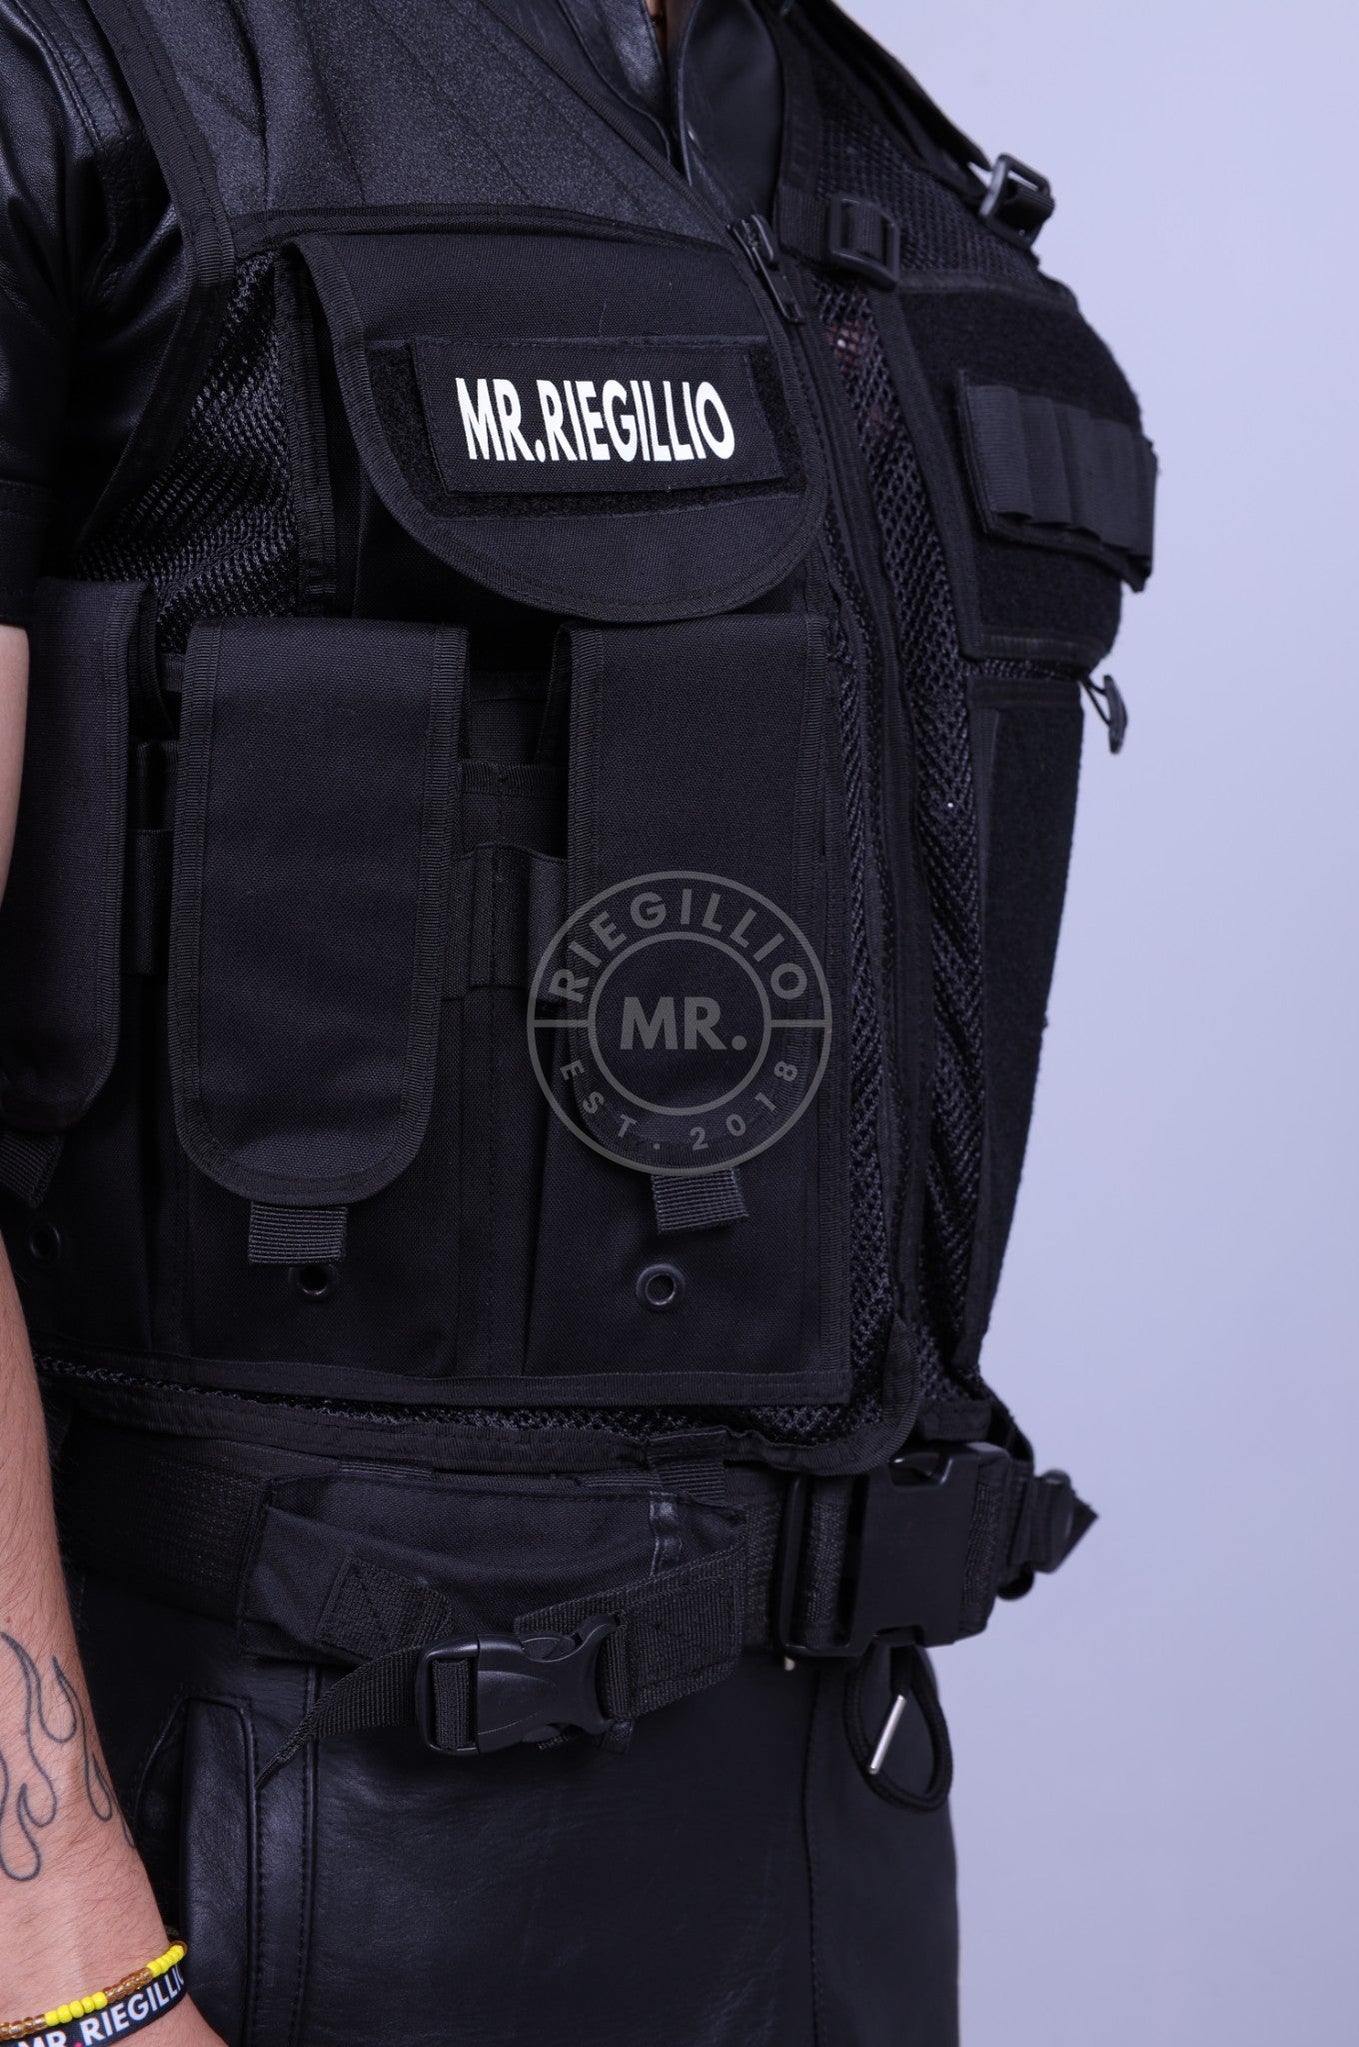 MR. Utility Vest by Mr Riegillio